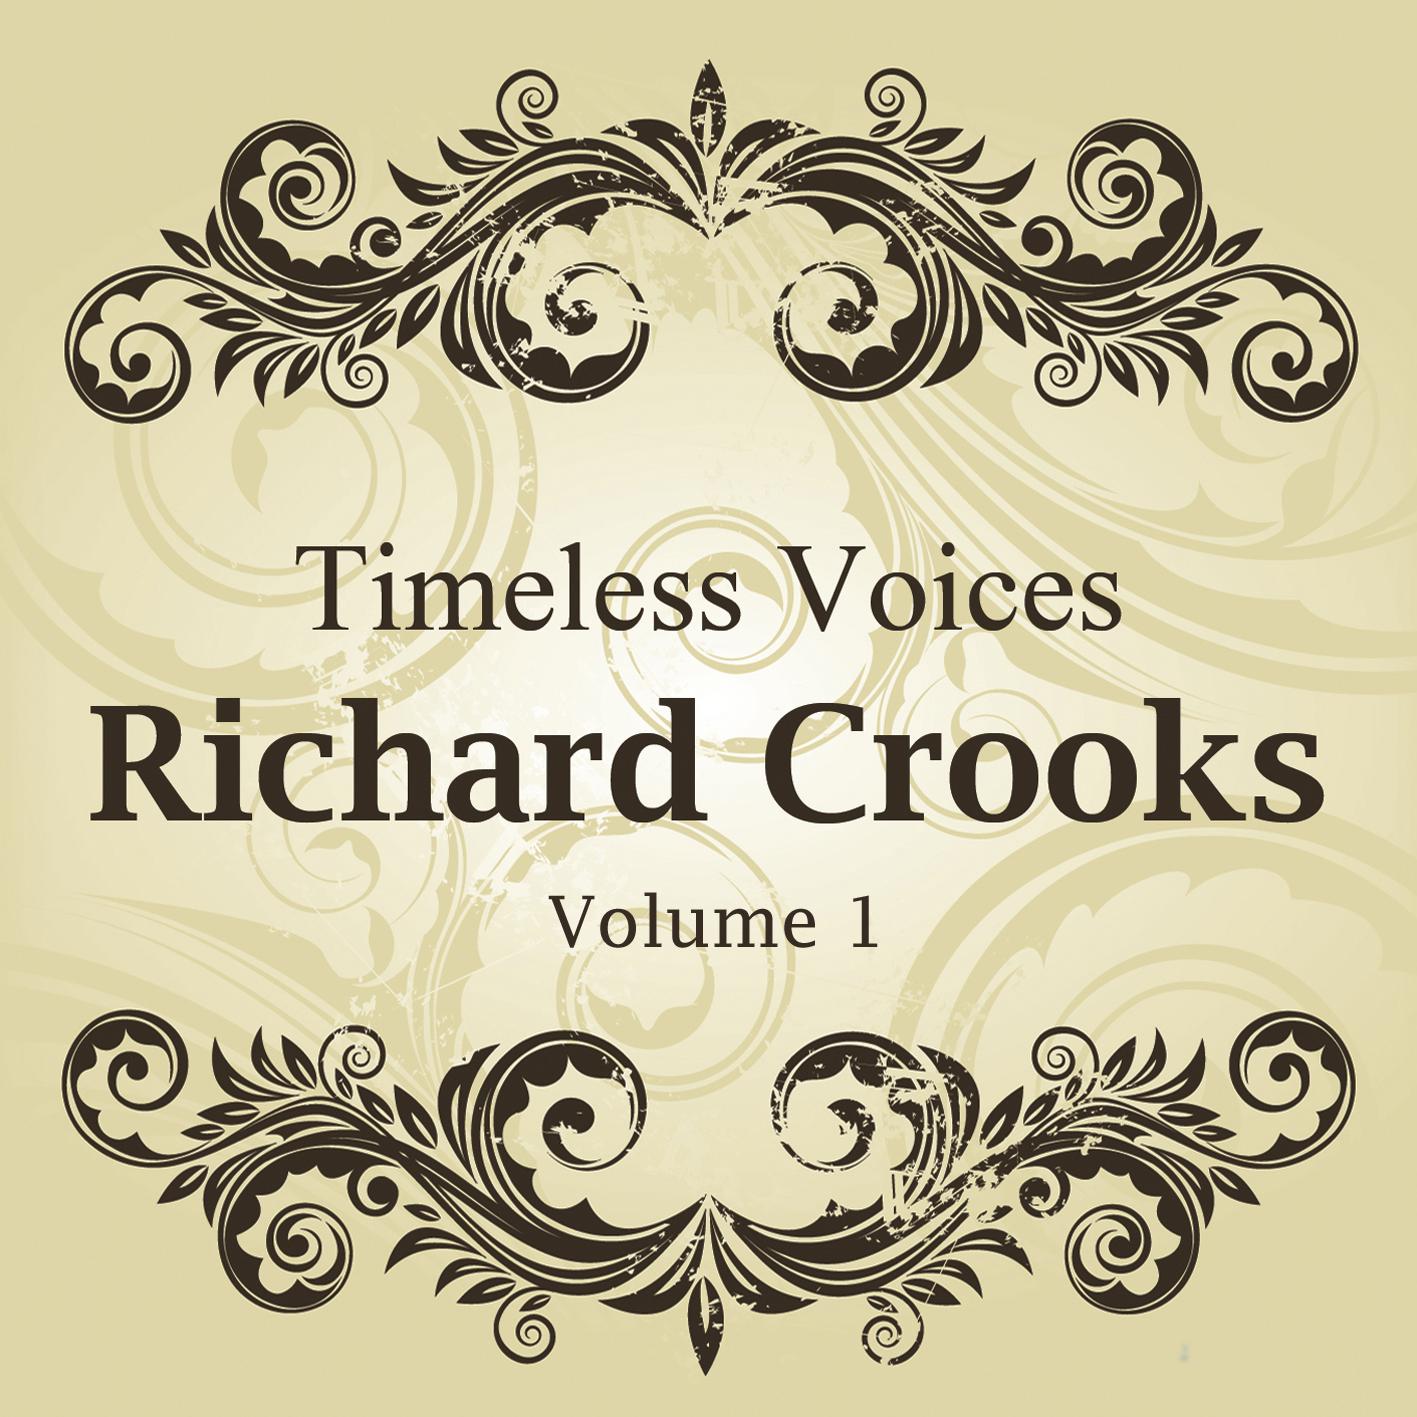 Timeless Voices: Richard Crooks Vol 1